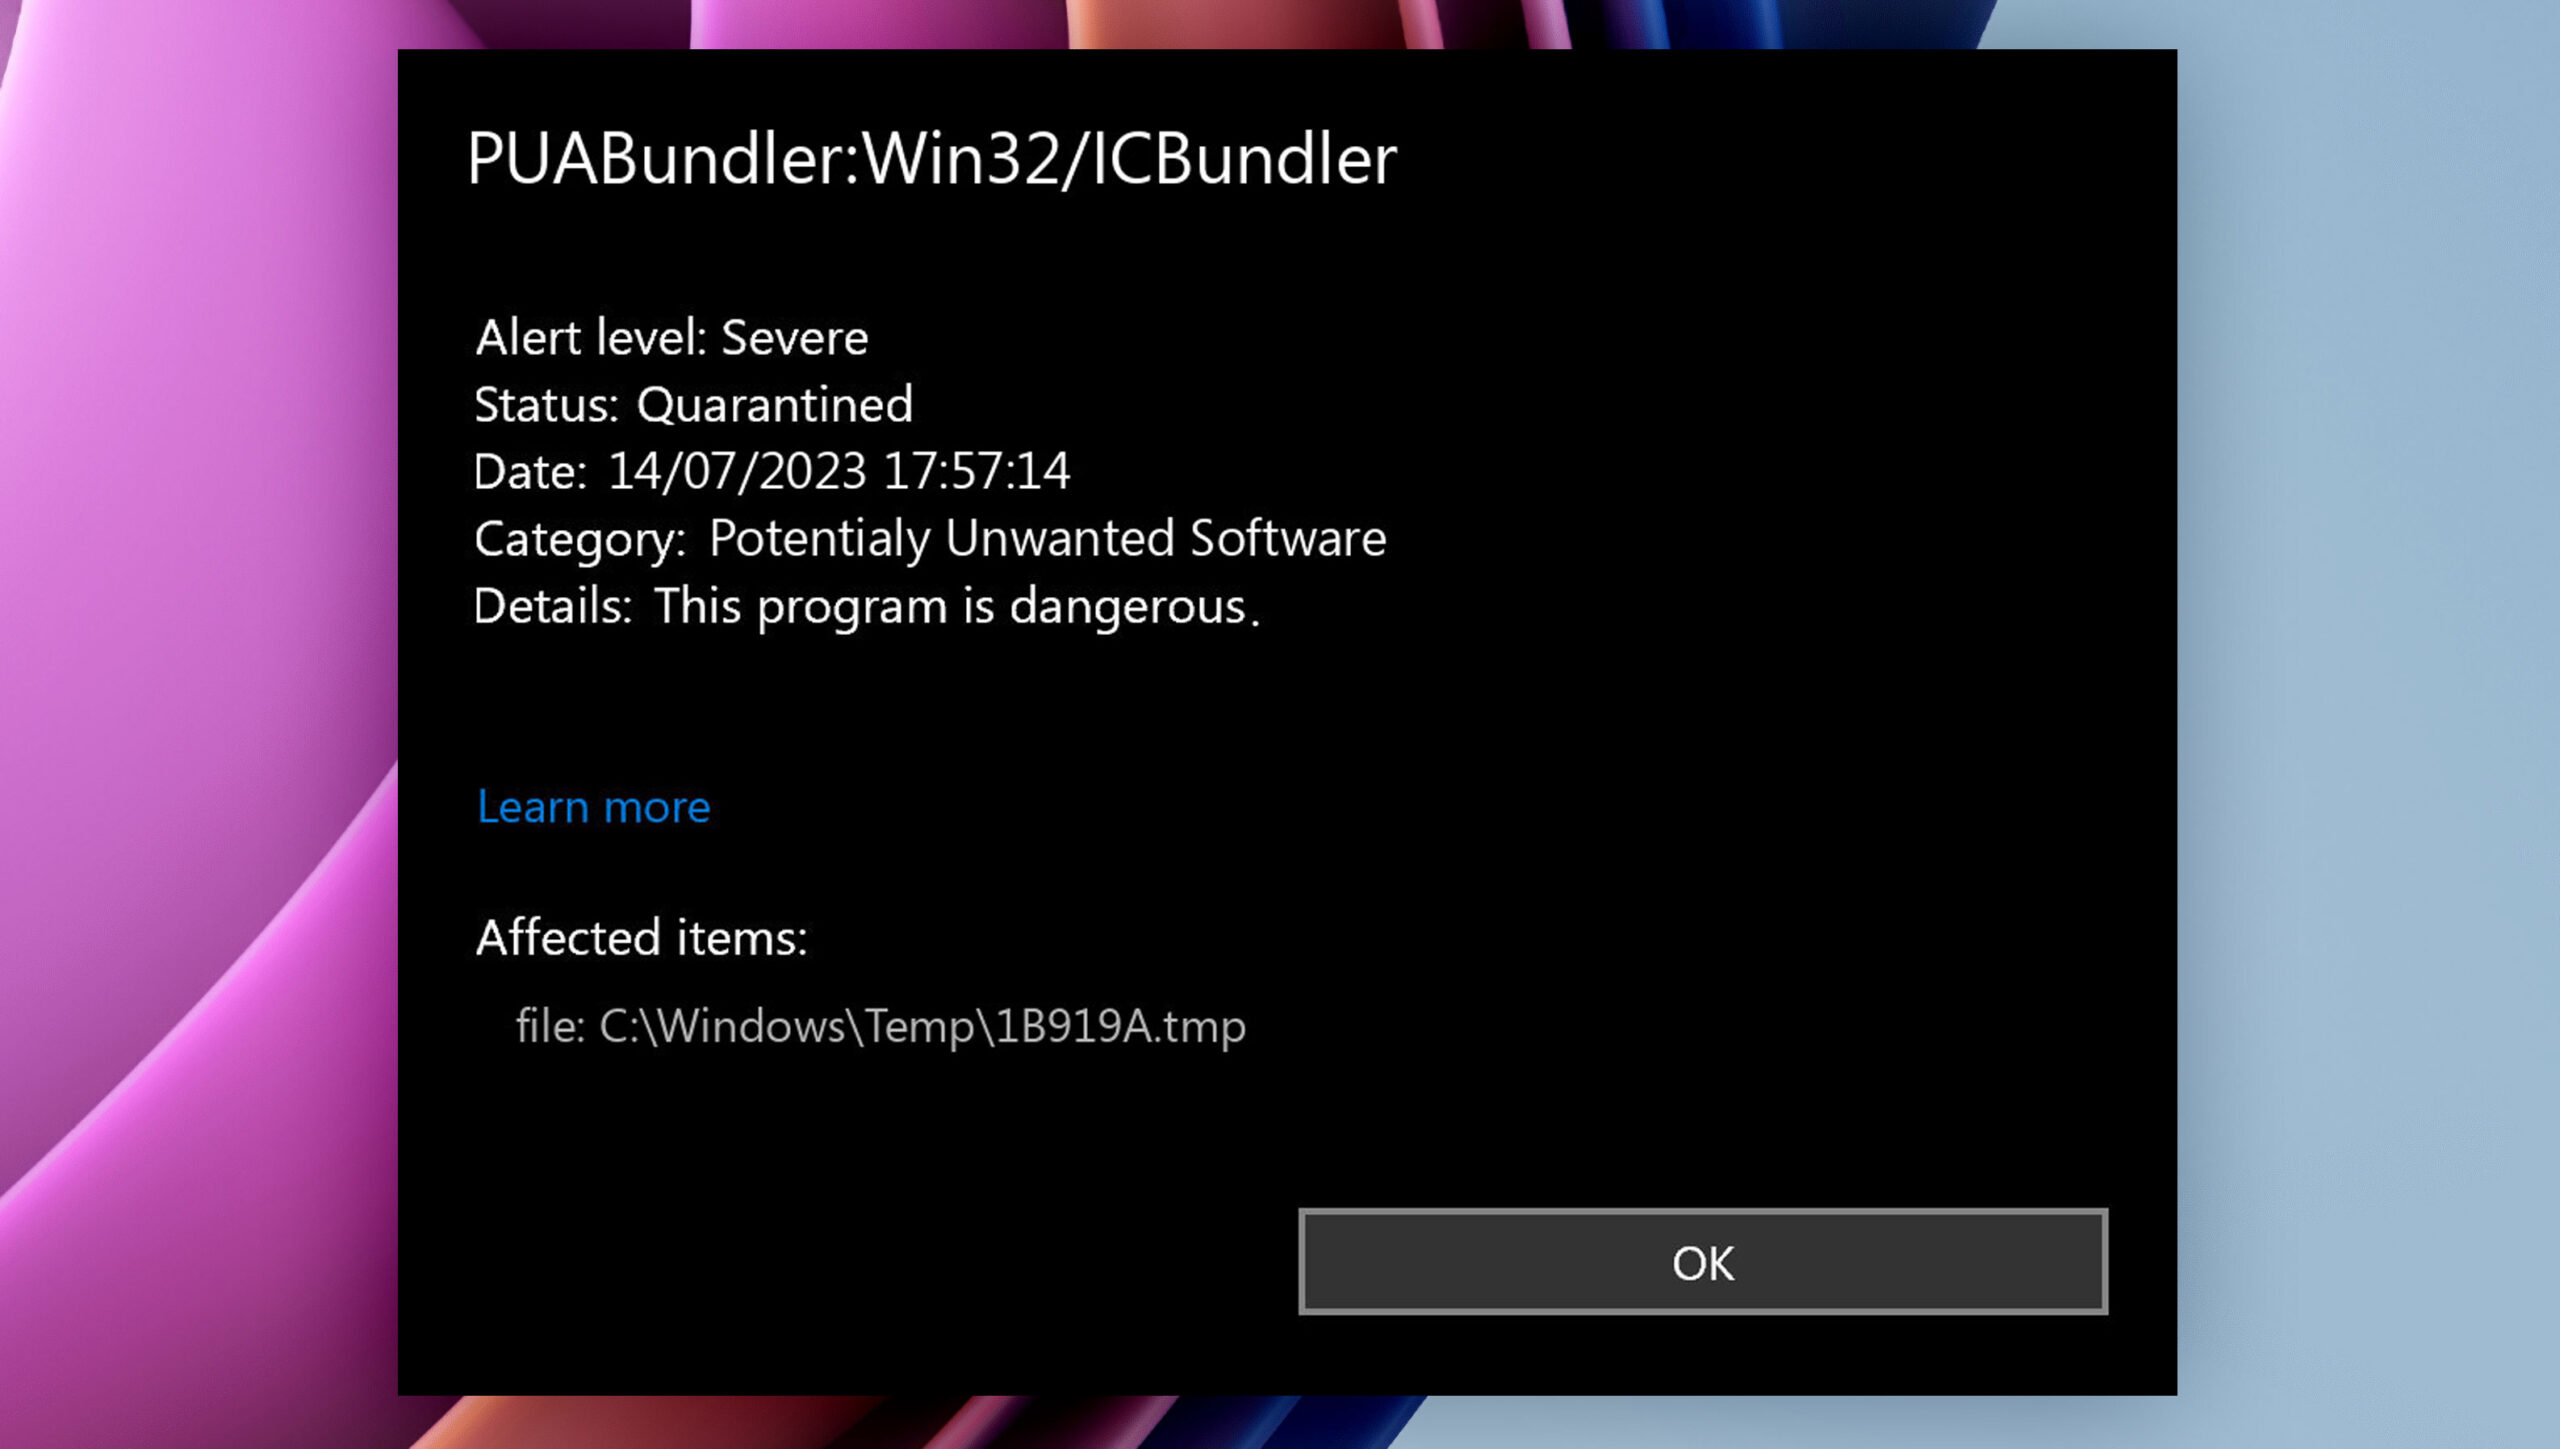 Microsoft Defender detects and flags PUABundler:Win32/ICBundler